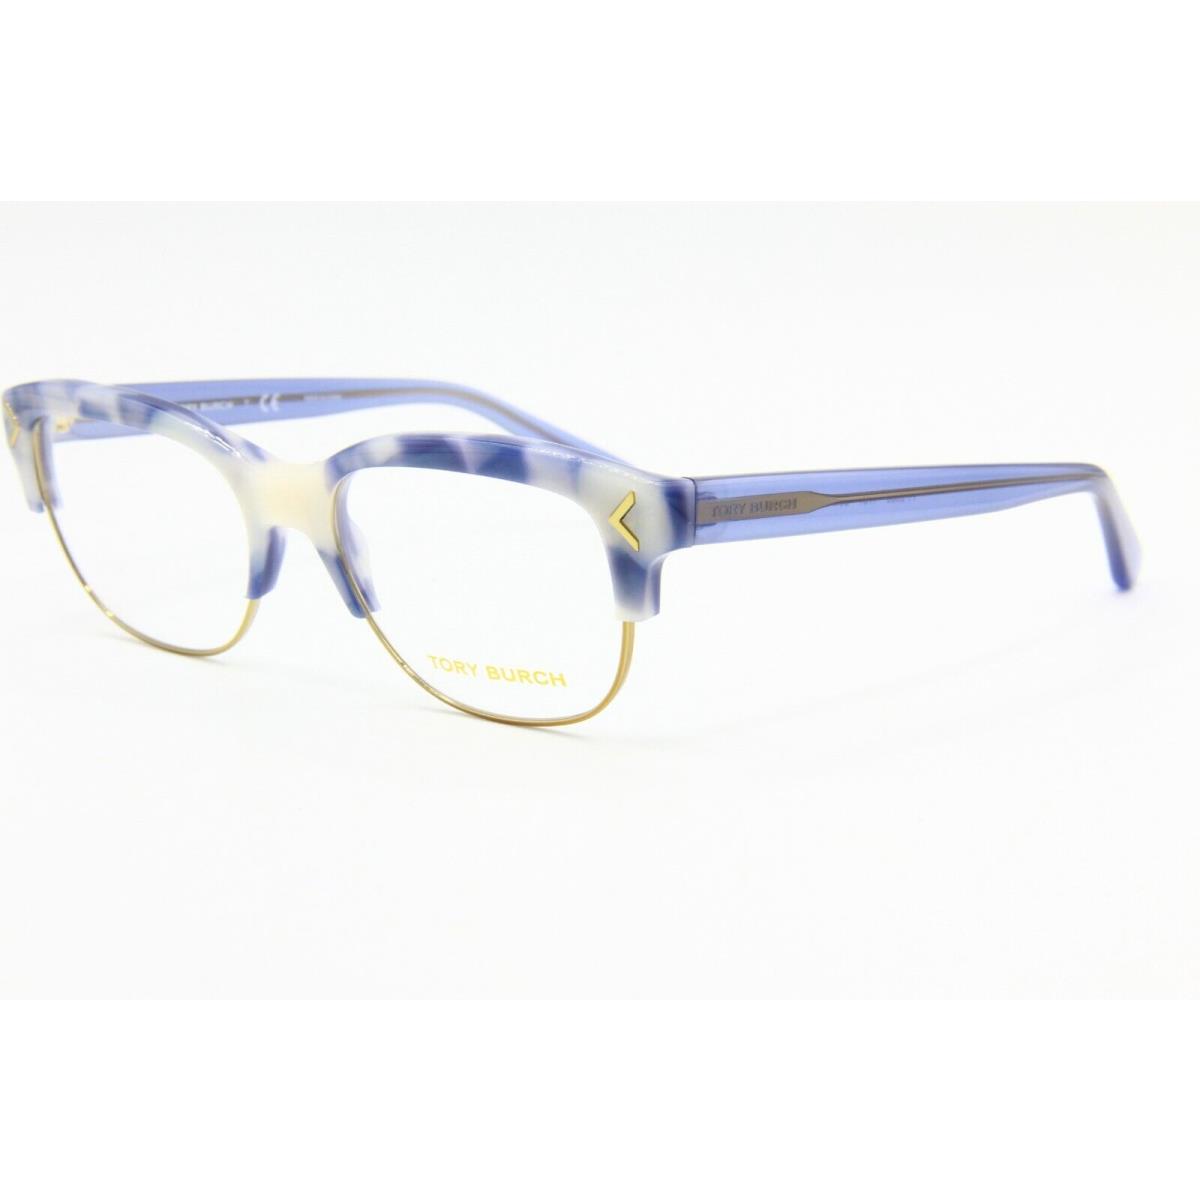 Tory Burch TY 2083 1707 Blue Eyeglasses Frame TY2083 RX 53-17